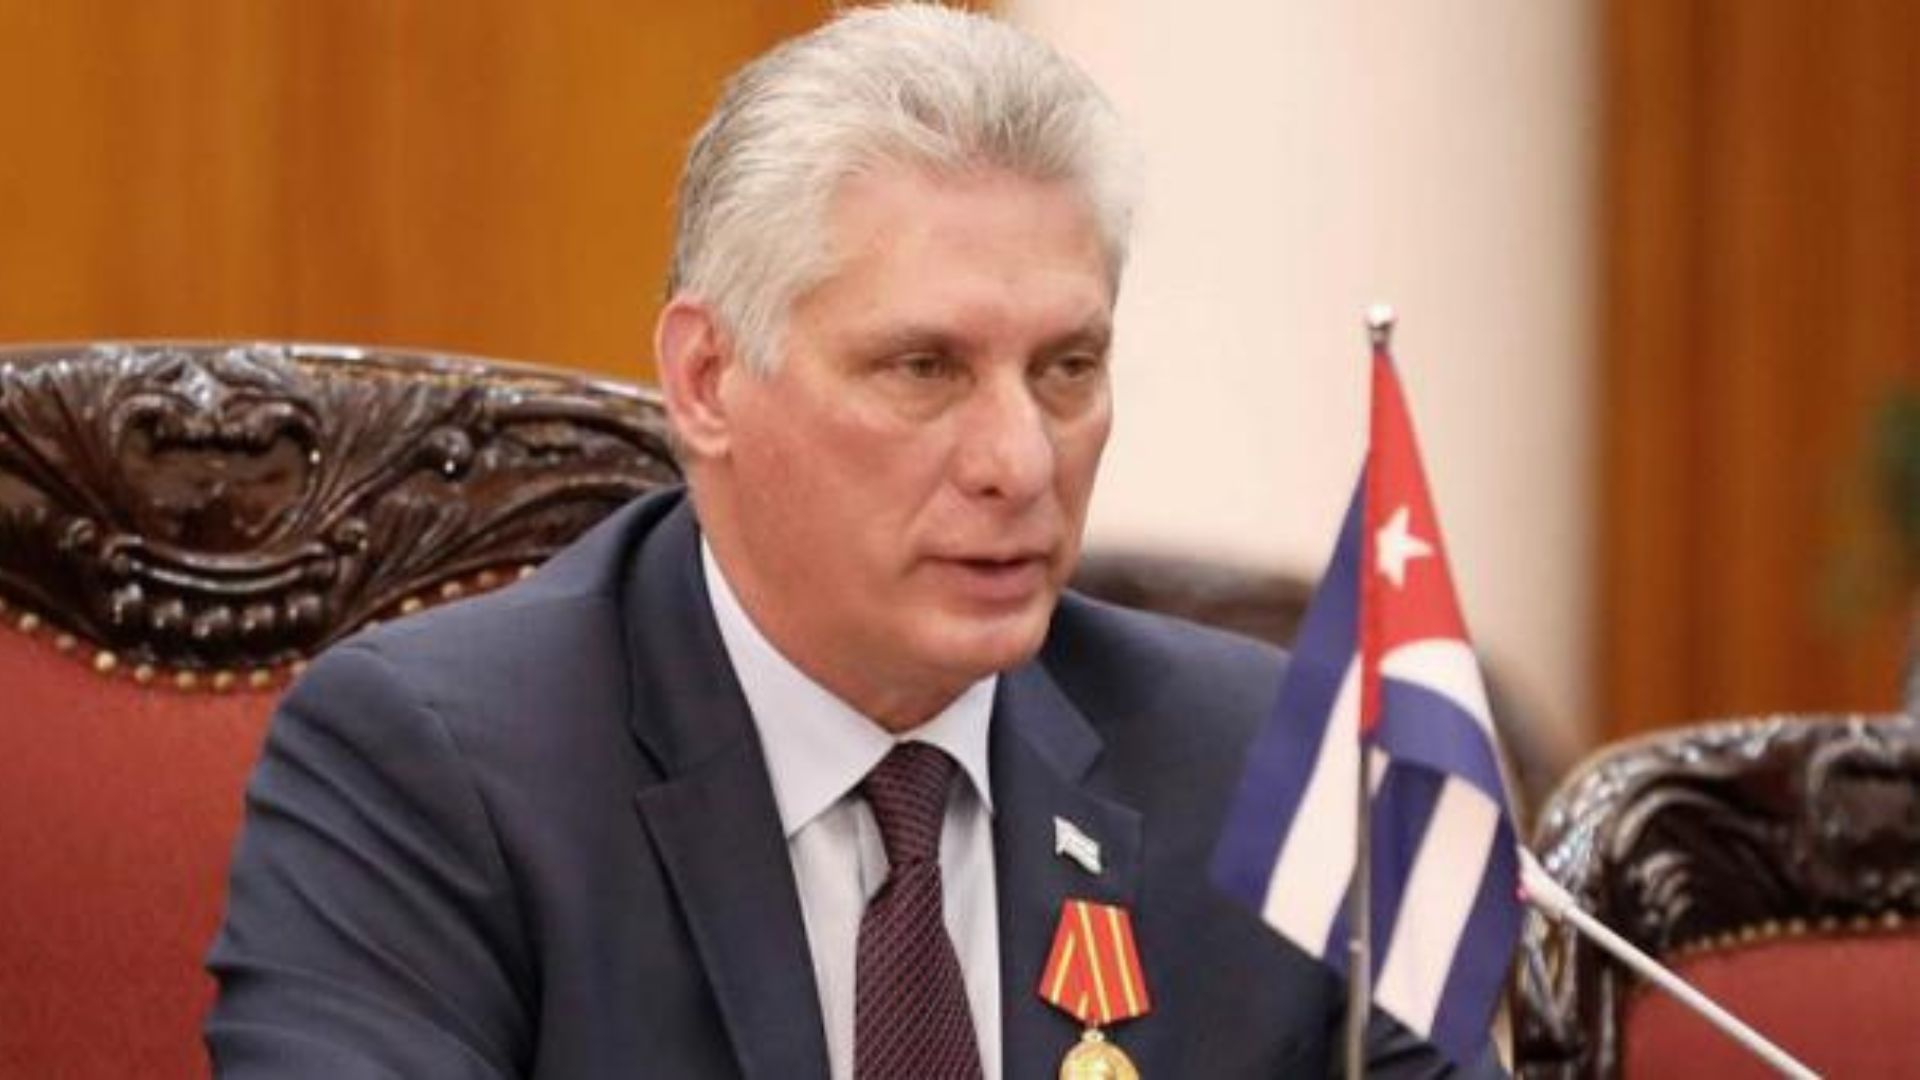 Cubana explota contra Díaz-Canel en carta pública: "Usted no tiene moral"